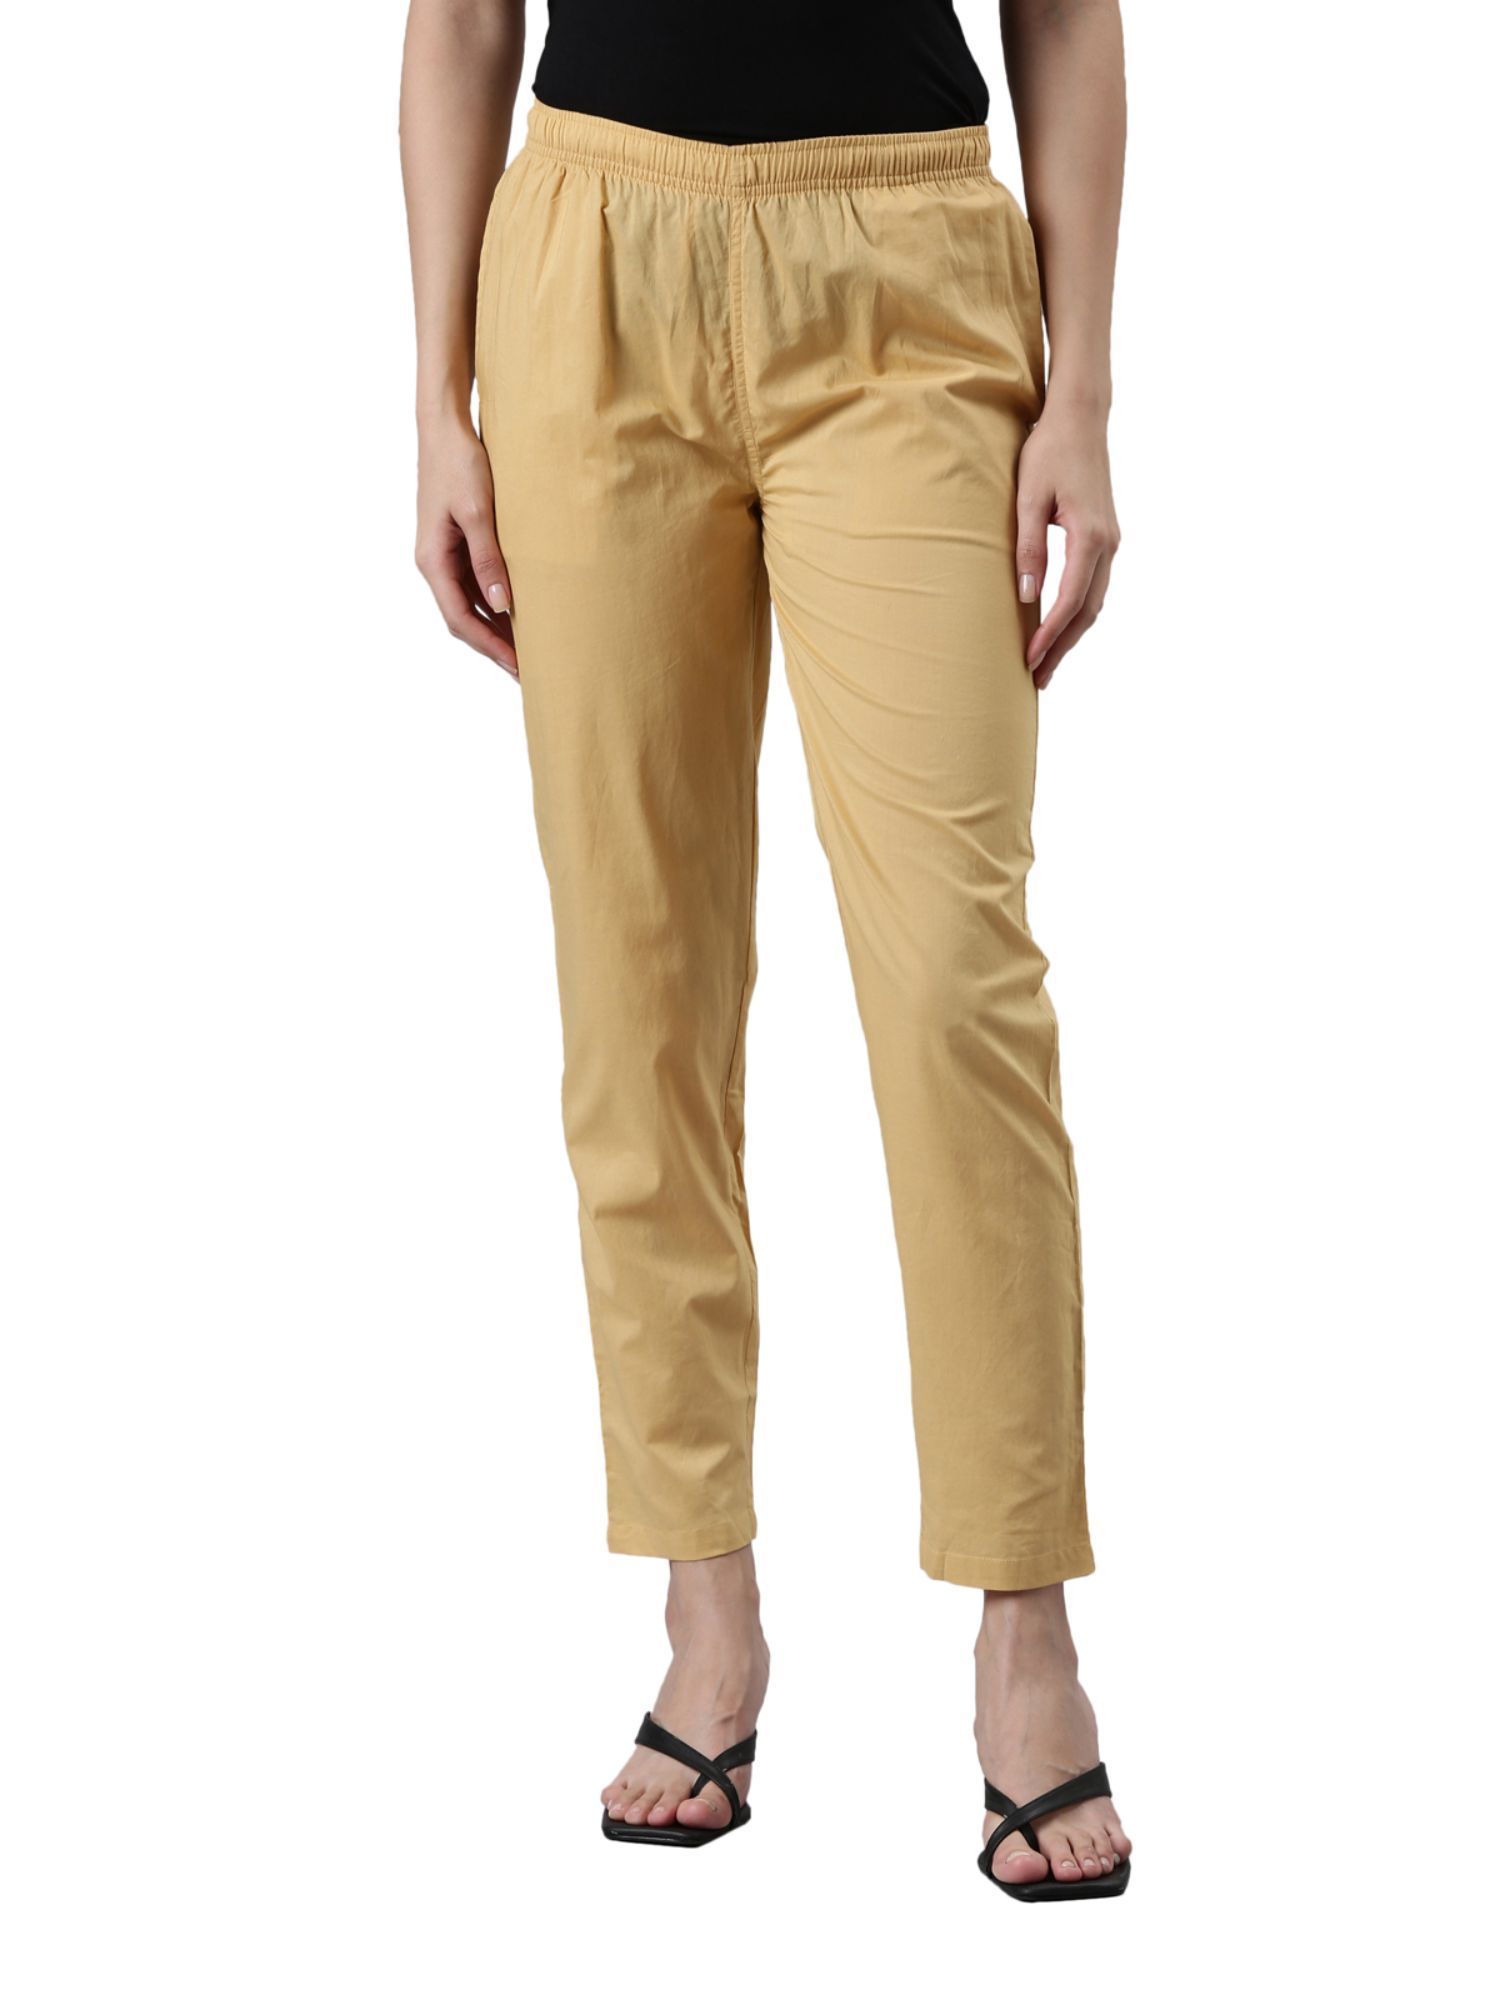 Buy SAIRISH FASHION HUB Slim Fit Cotton Pants for Women Stylish/Cotton  Pants Women/Women Trouser Pants (Pack of 3) (Maroon, Grey, Blue) at  Amazon.in